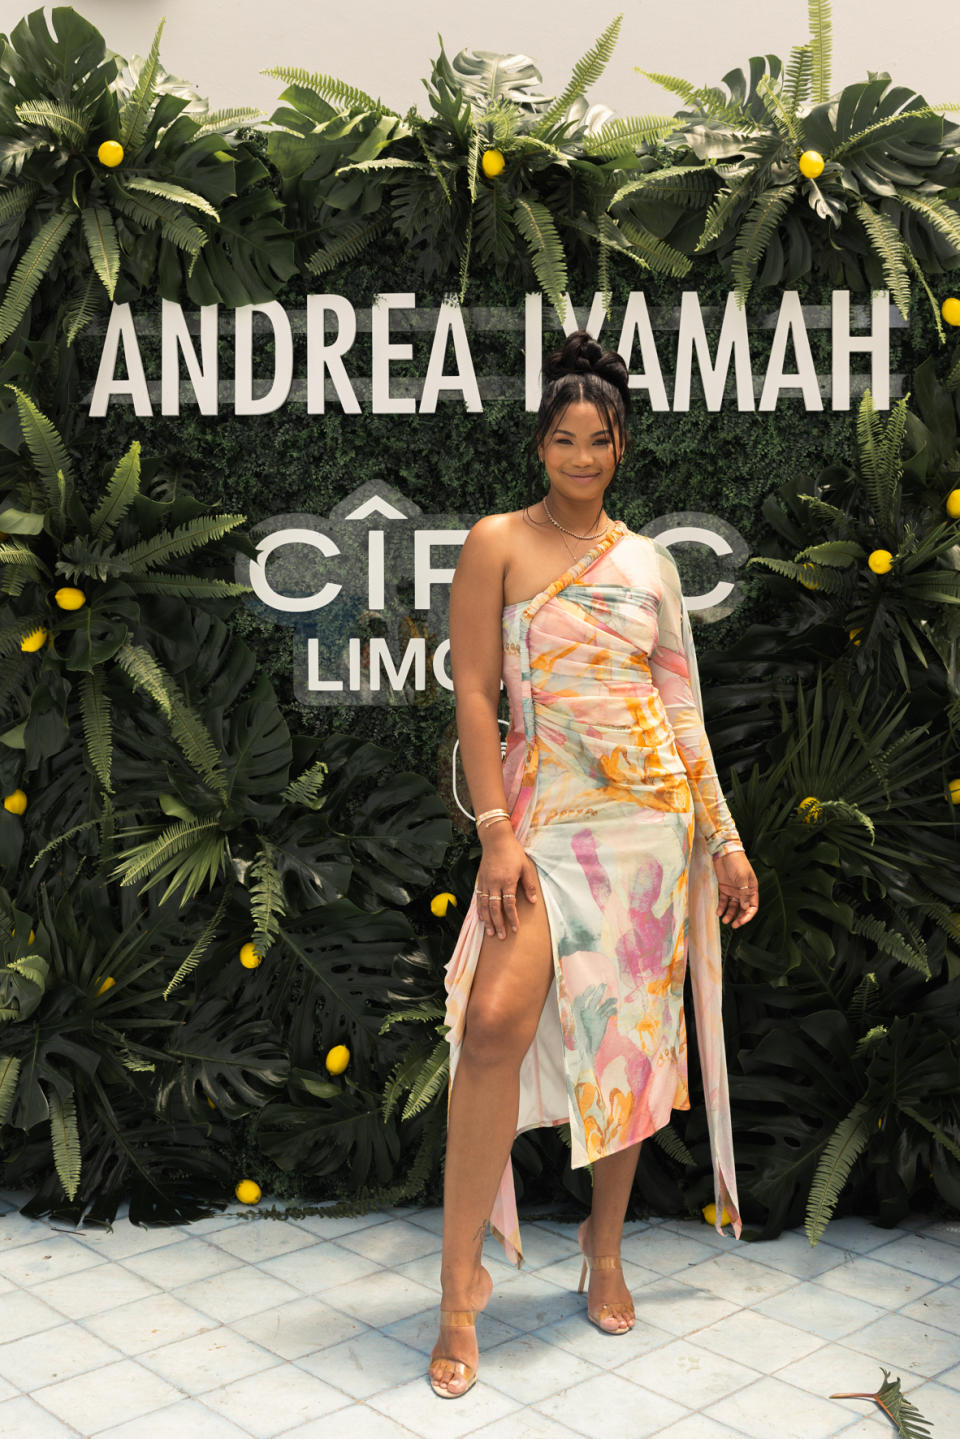 Chanel Iman rocks an Andrea Iyamah dress for Miami Swim Week at 